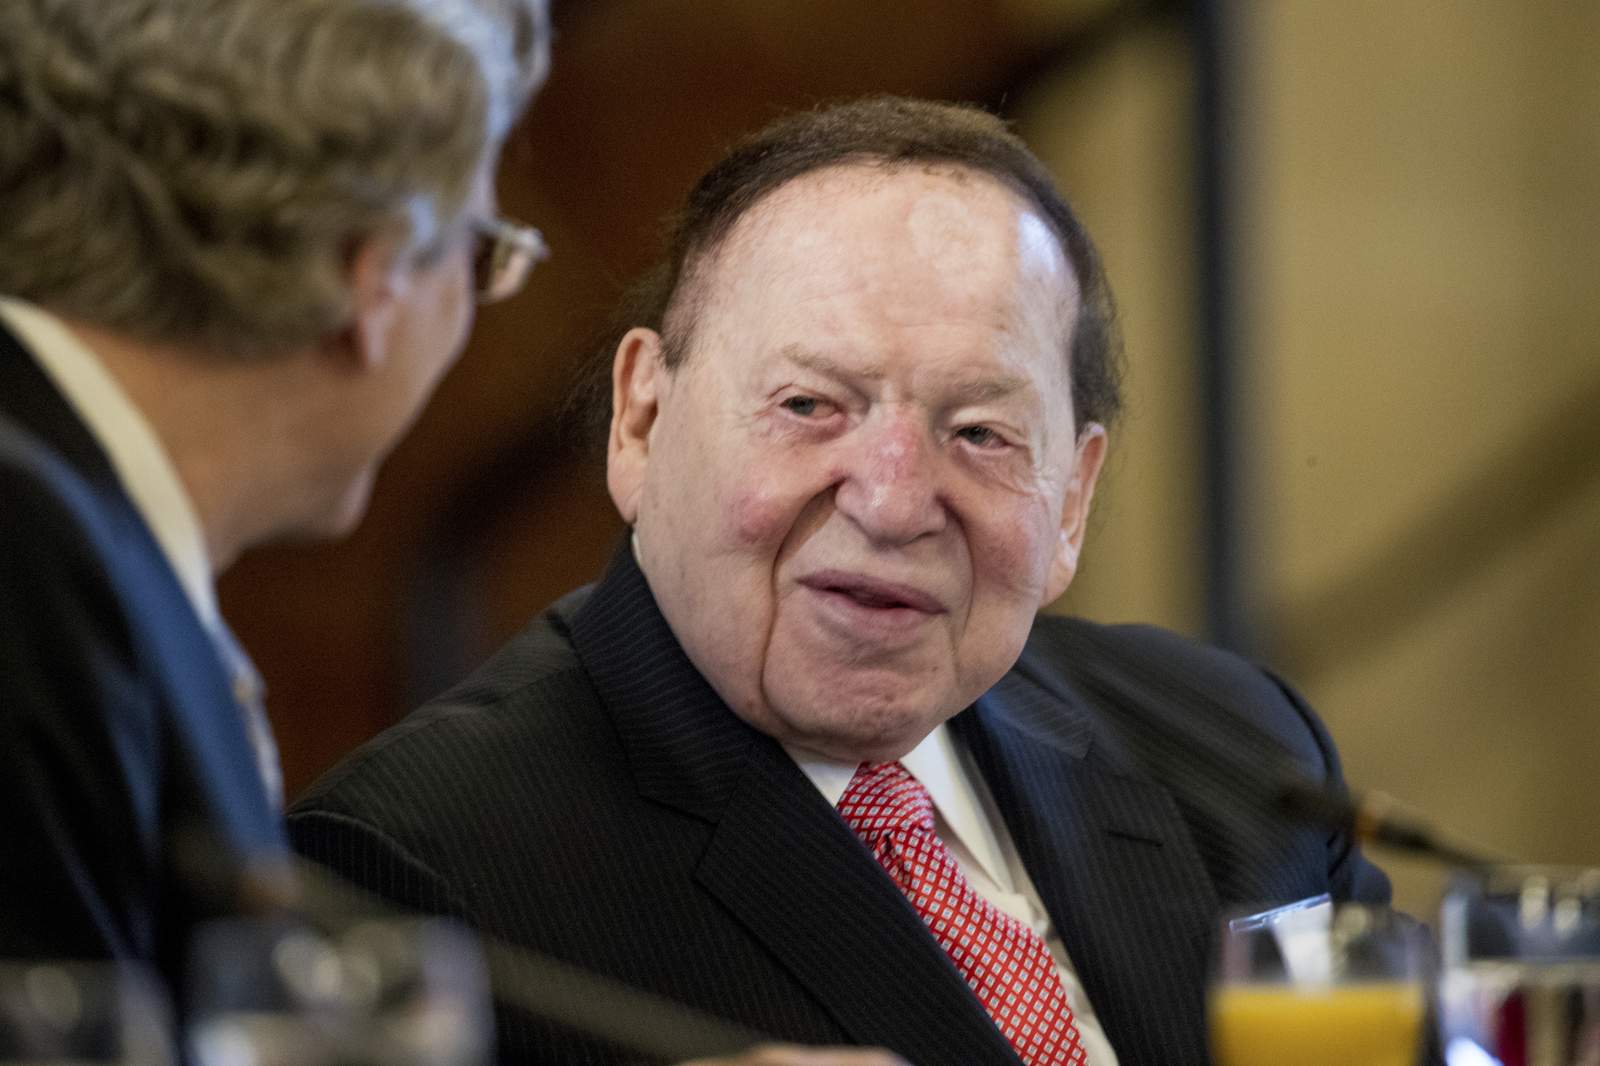 Sheldon Adelson, casino mogul and GOP donor, dies at 87